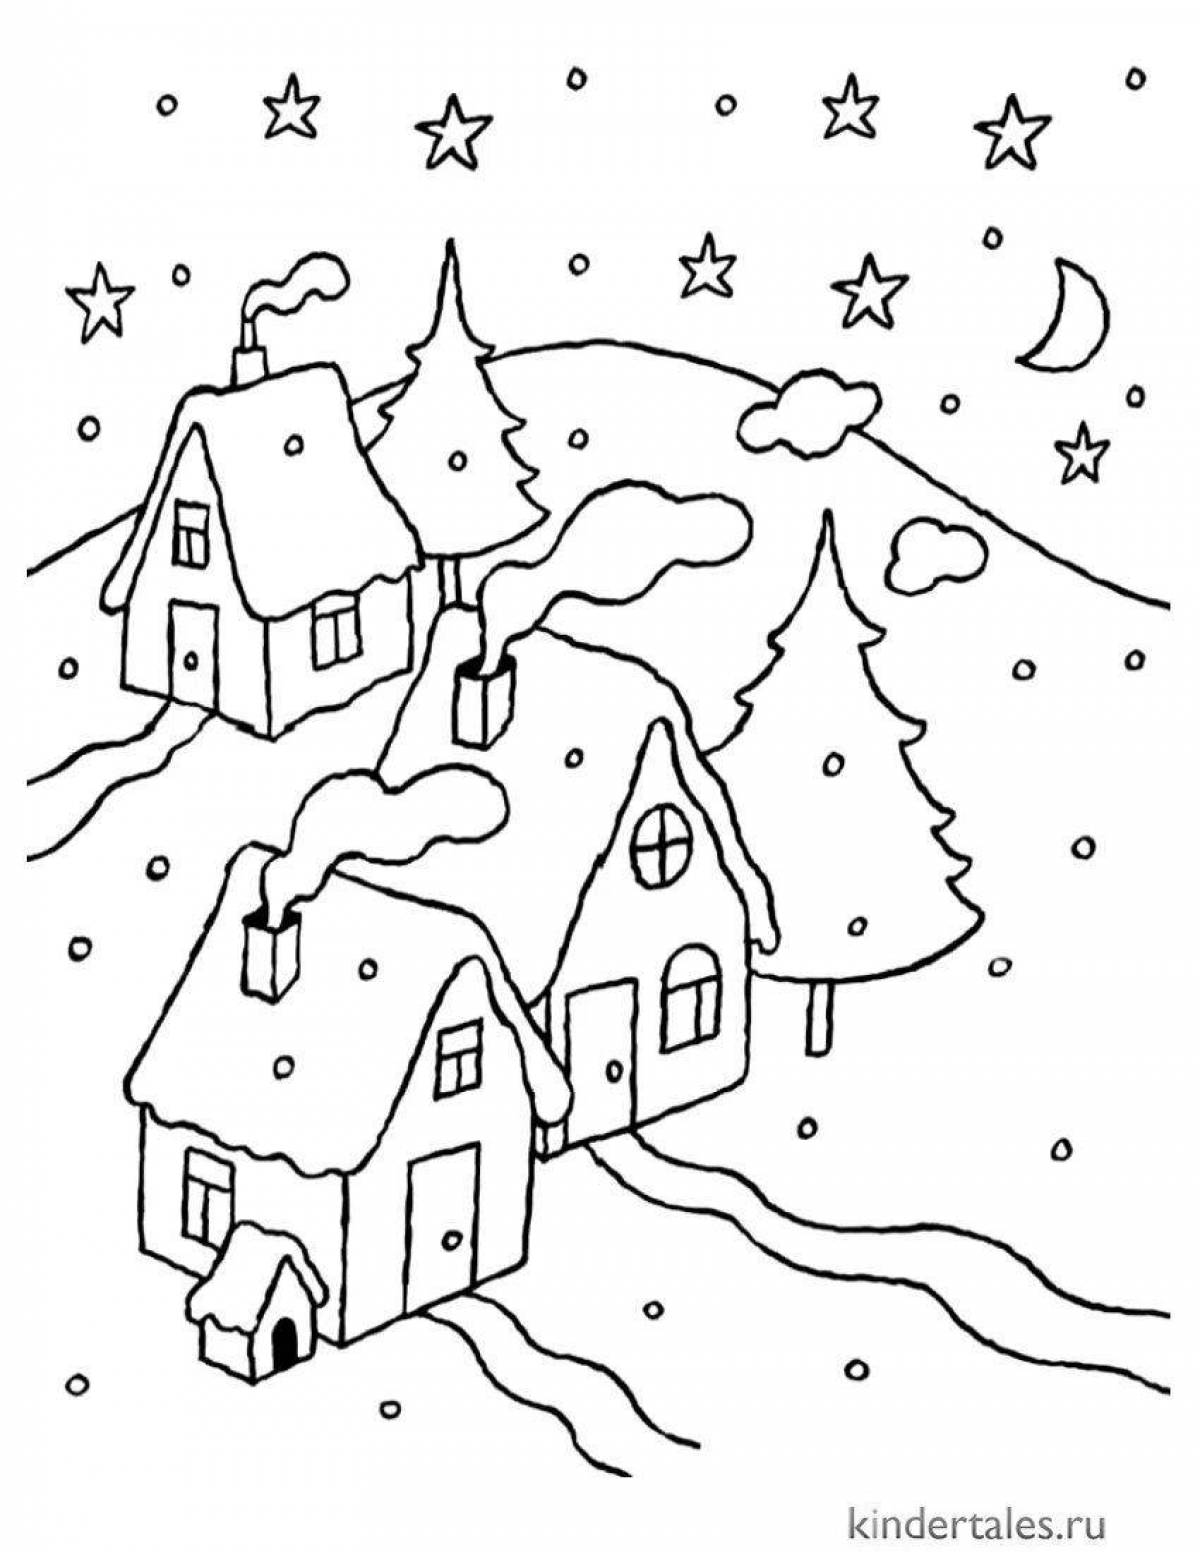 Joyful winter landscape coloring book for children 7 years old